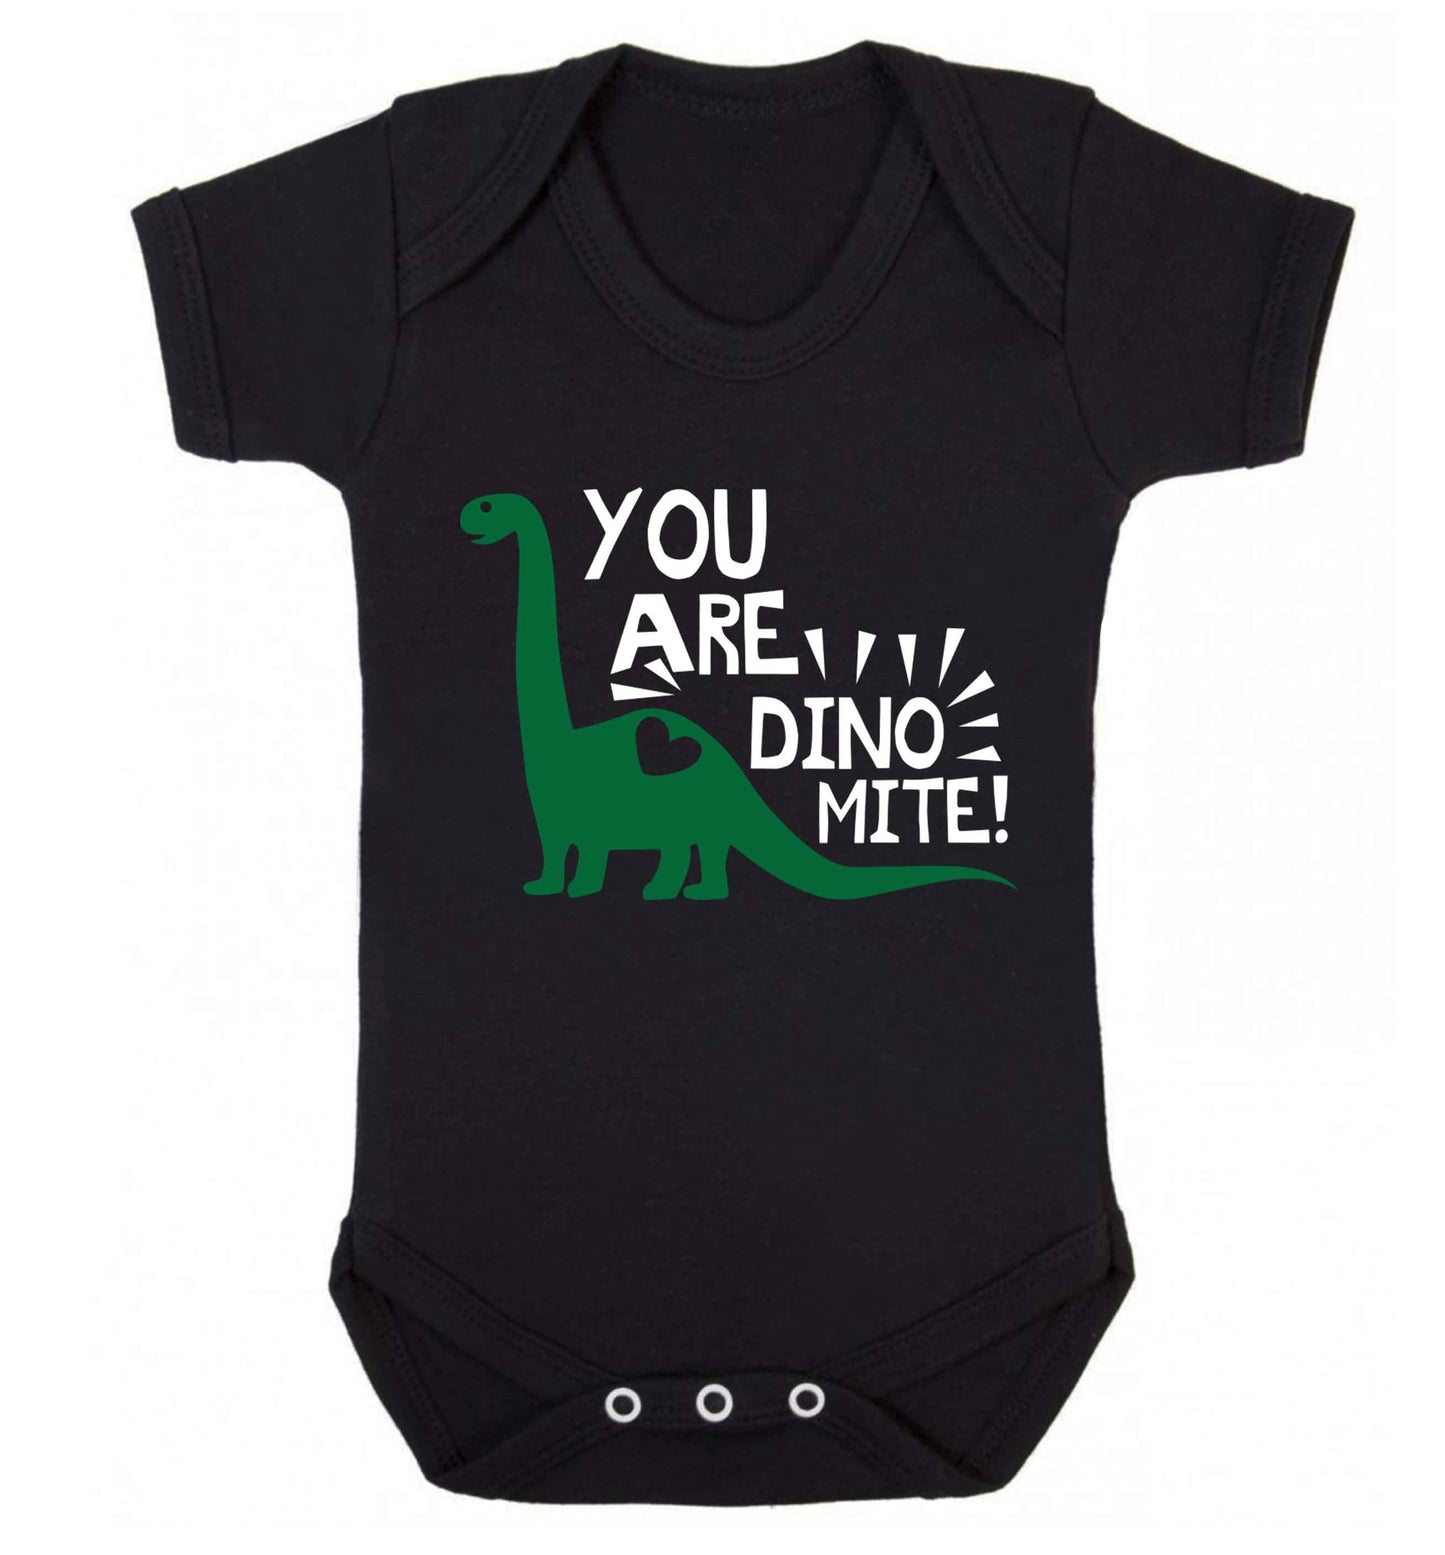 You are dinomite! Baby Vest black 18-24 months